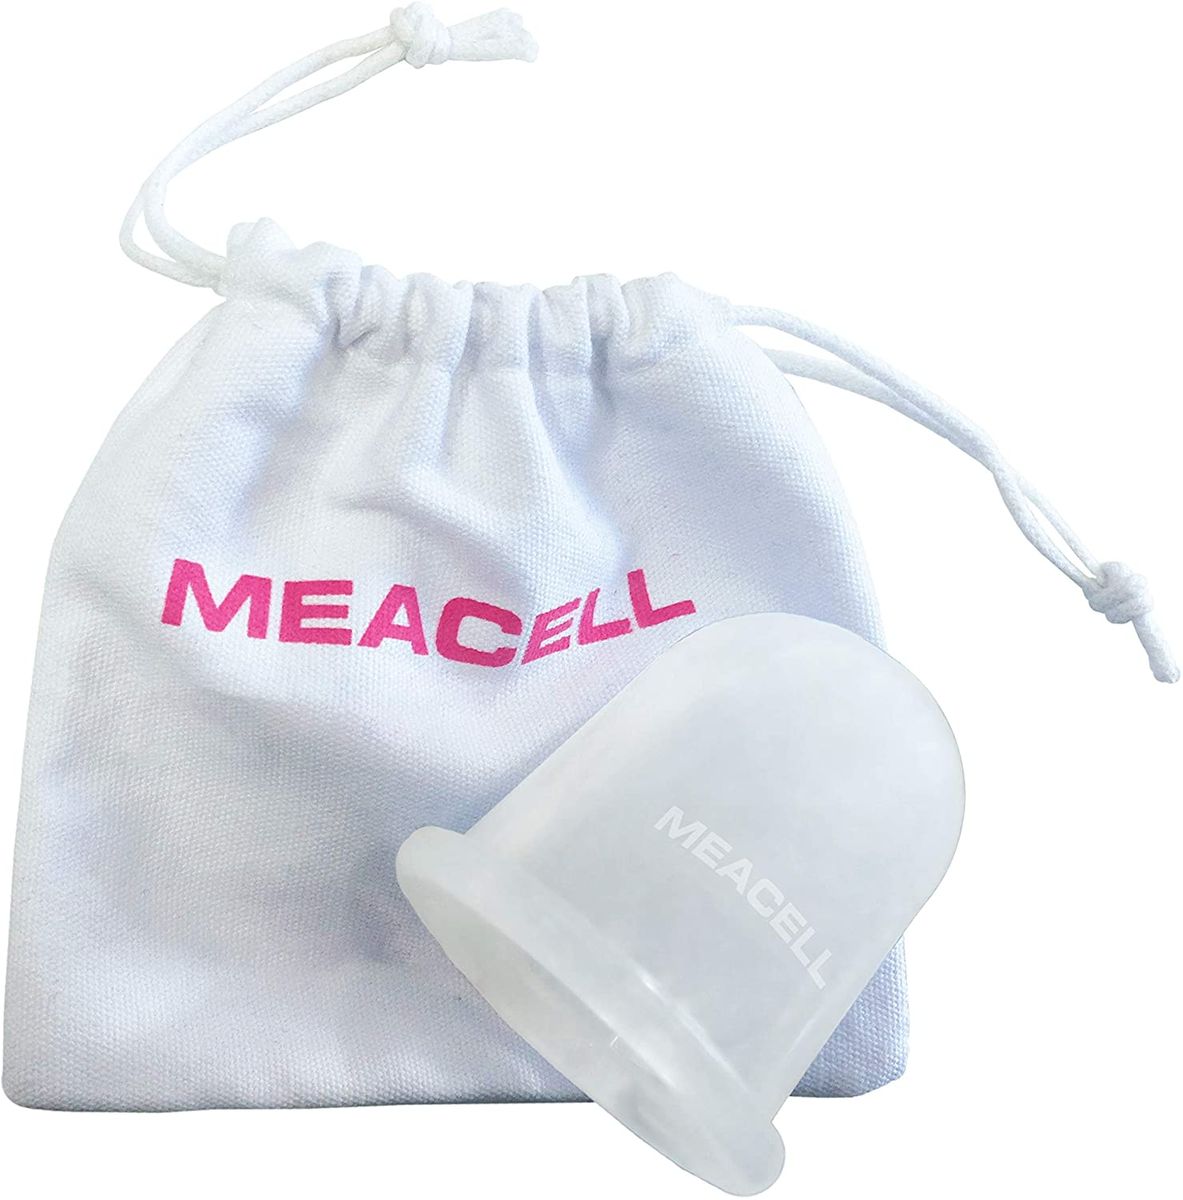 Plastimea Vacuum Cup Anti Cellulite MEACEL medical silicone suction cup